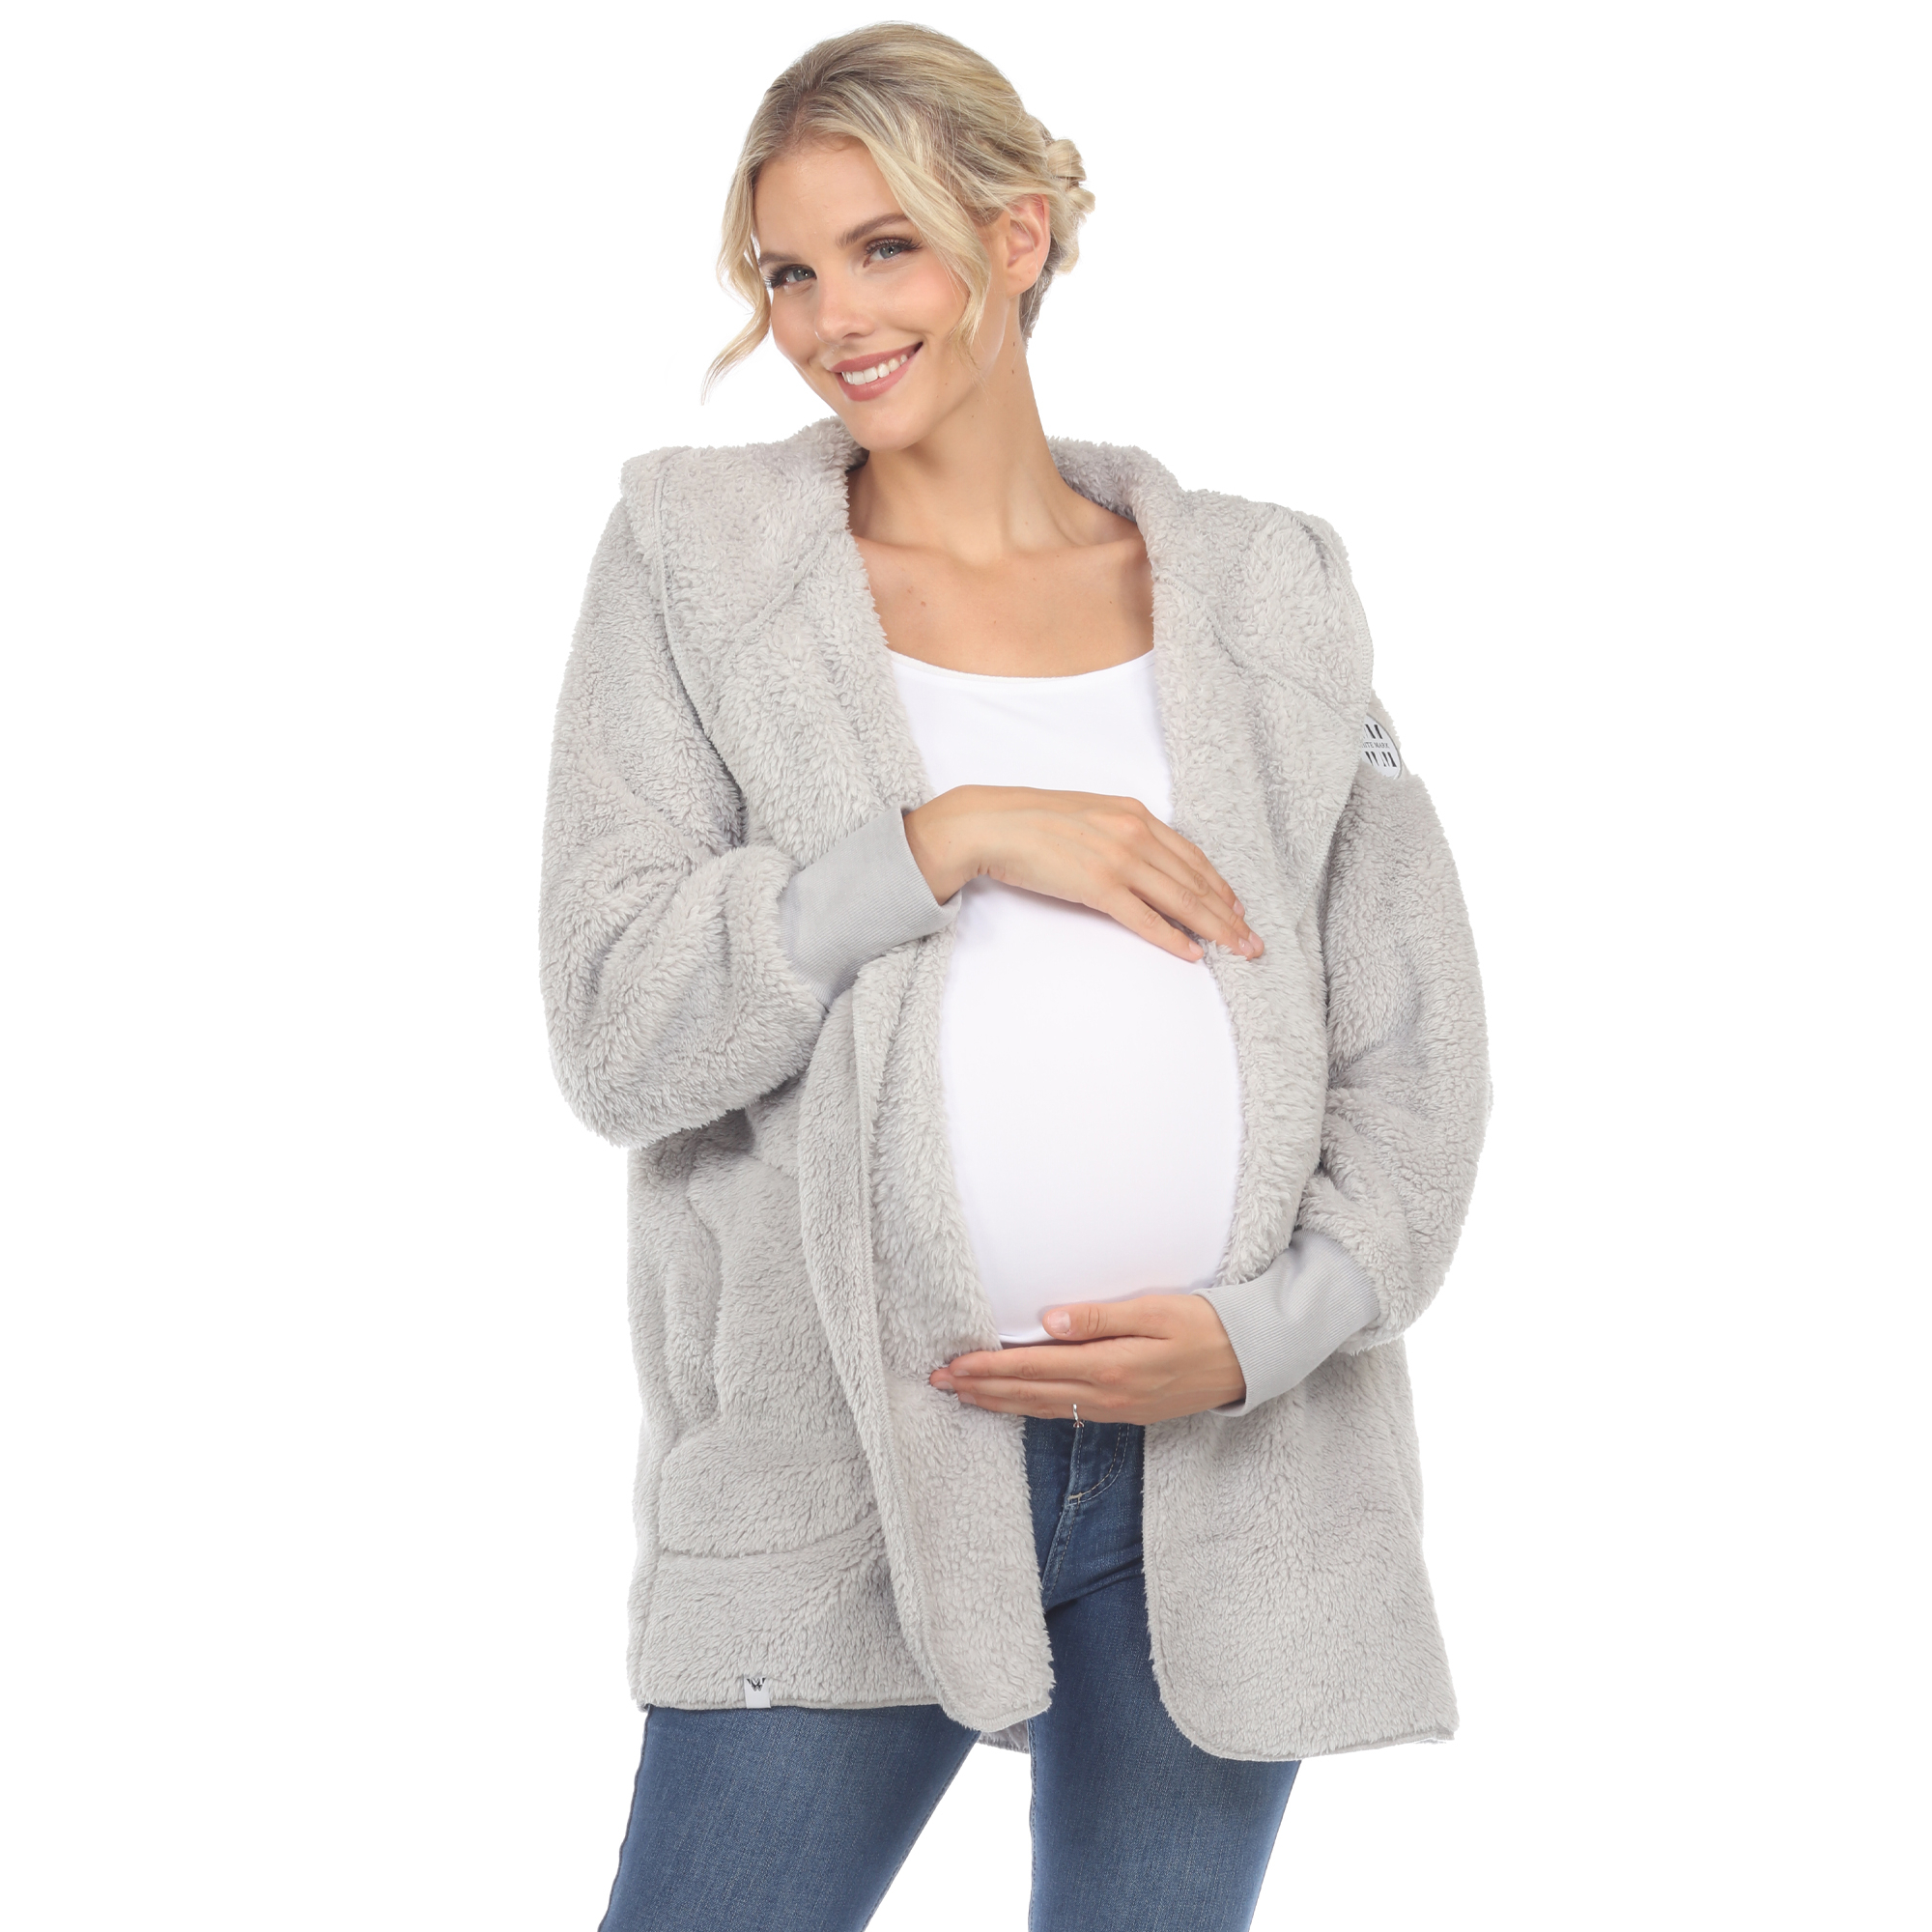 White Mark Womenâs Maternity Plush Hooded Cardigan With Pockets - Grey, S/M